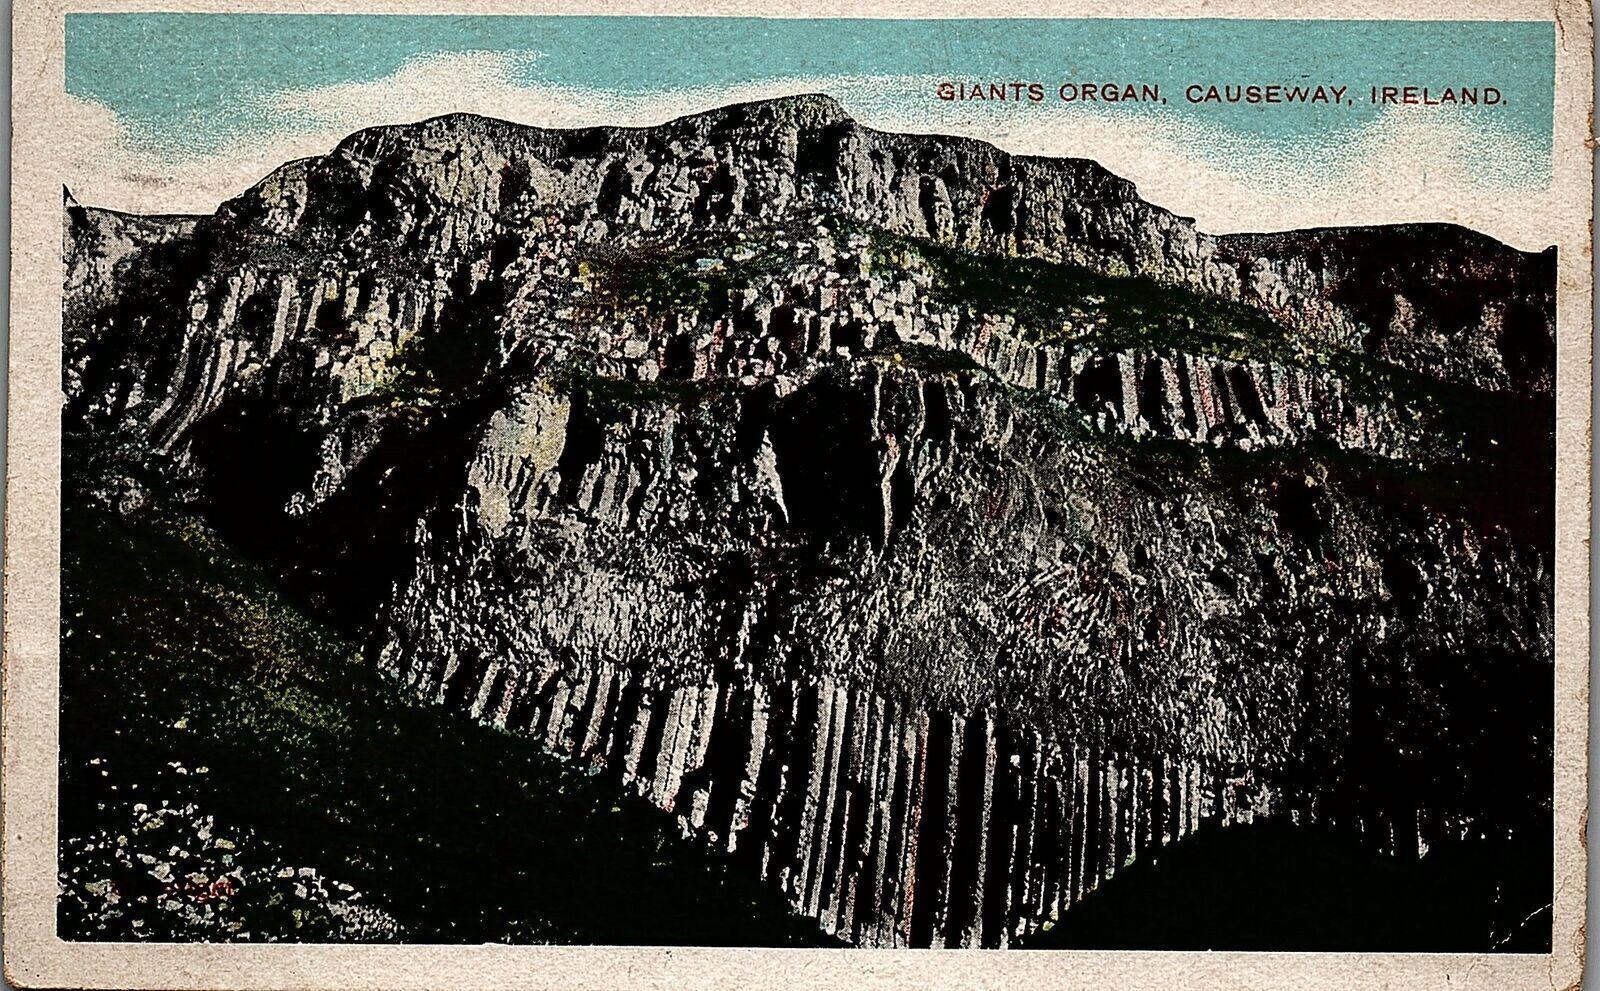 1912 NORTHERN IRELAND GIANTS ORGAN CAUSEWAY EARLY POSTCARD 34-302